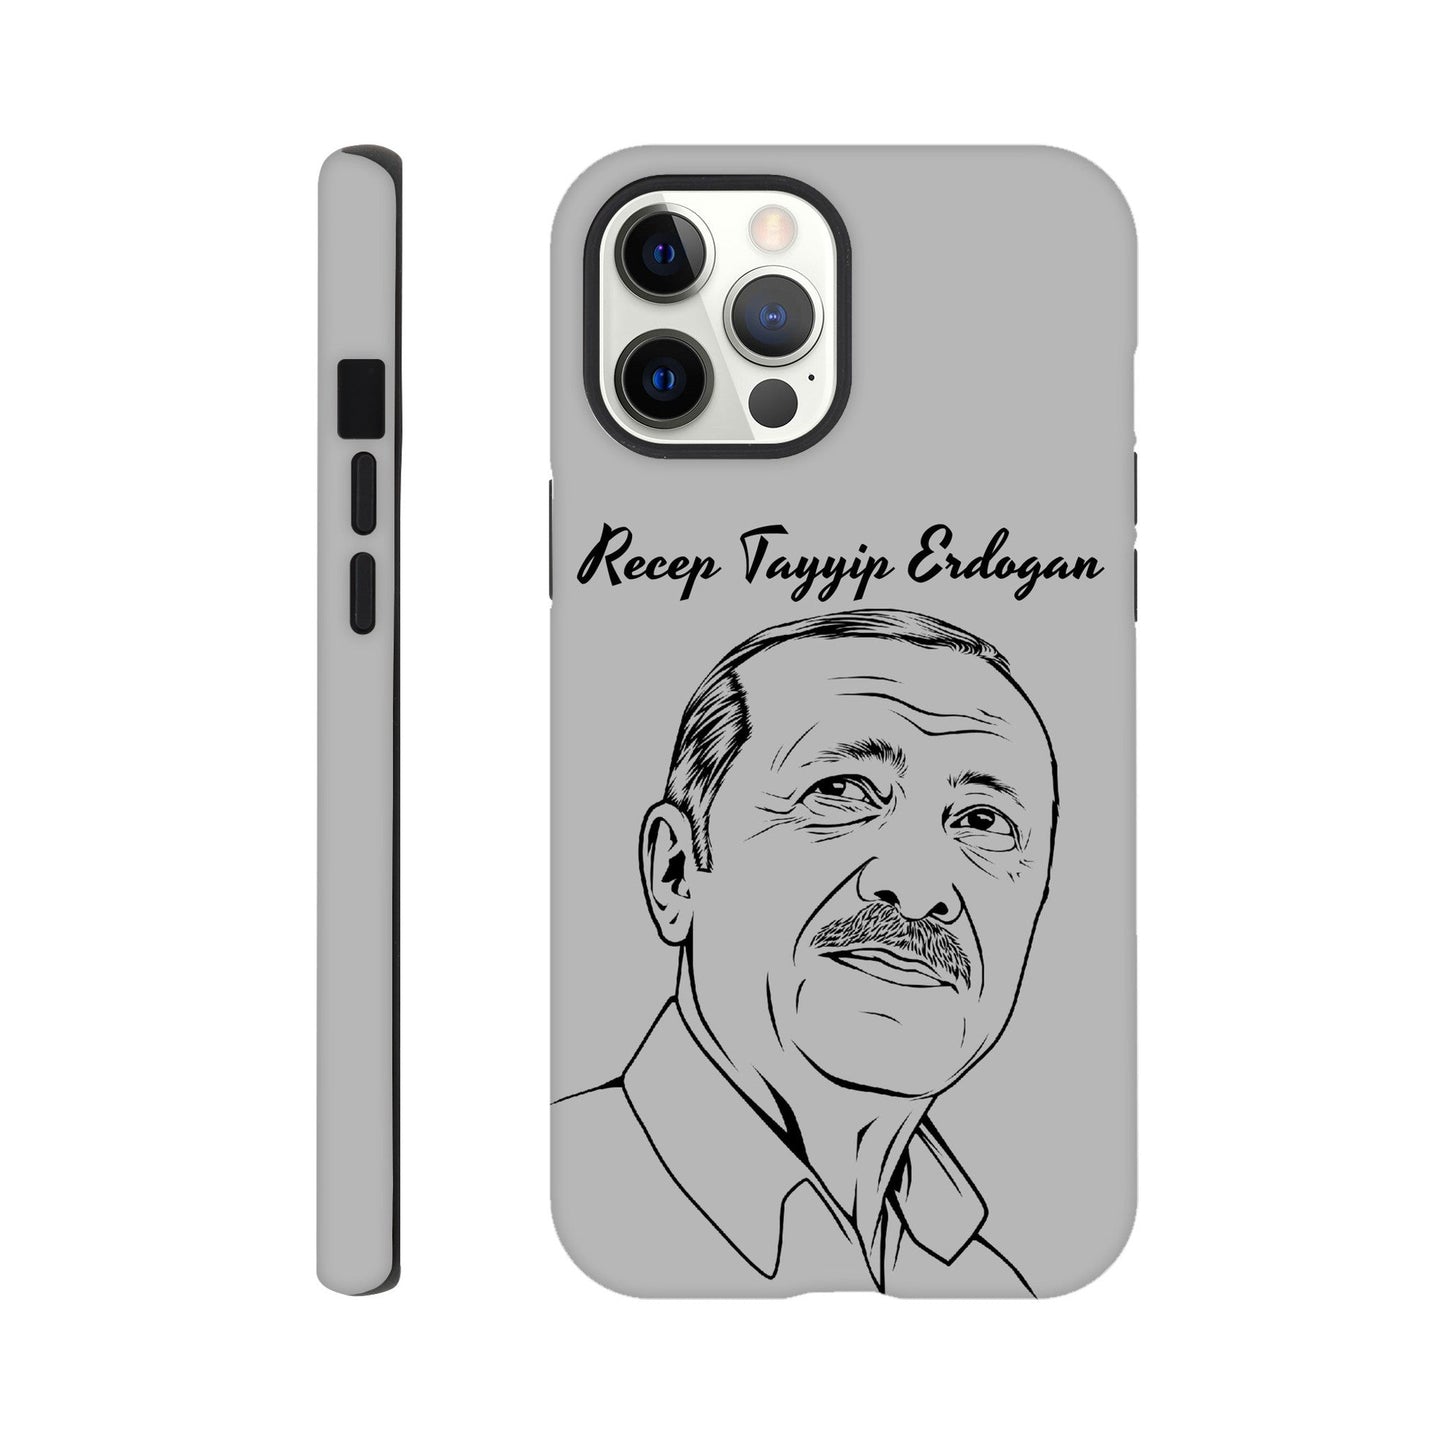 Recep Tayipp Erdogan iPhone Case